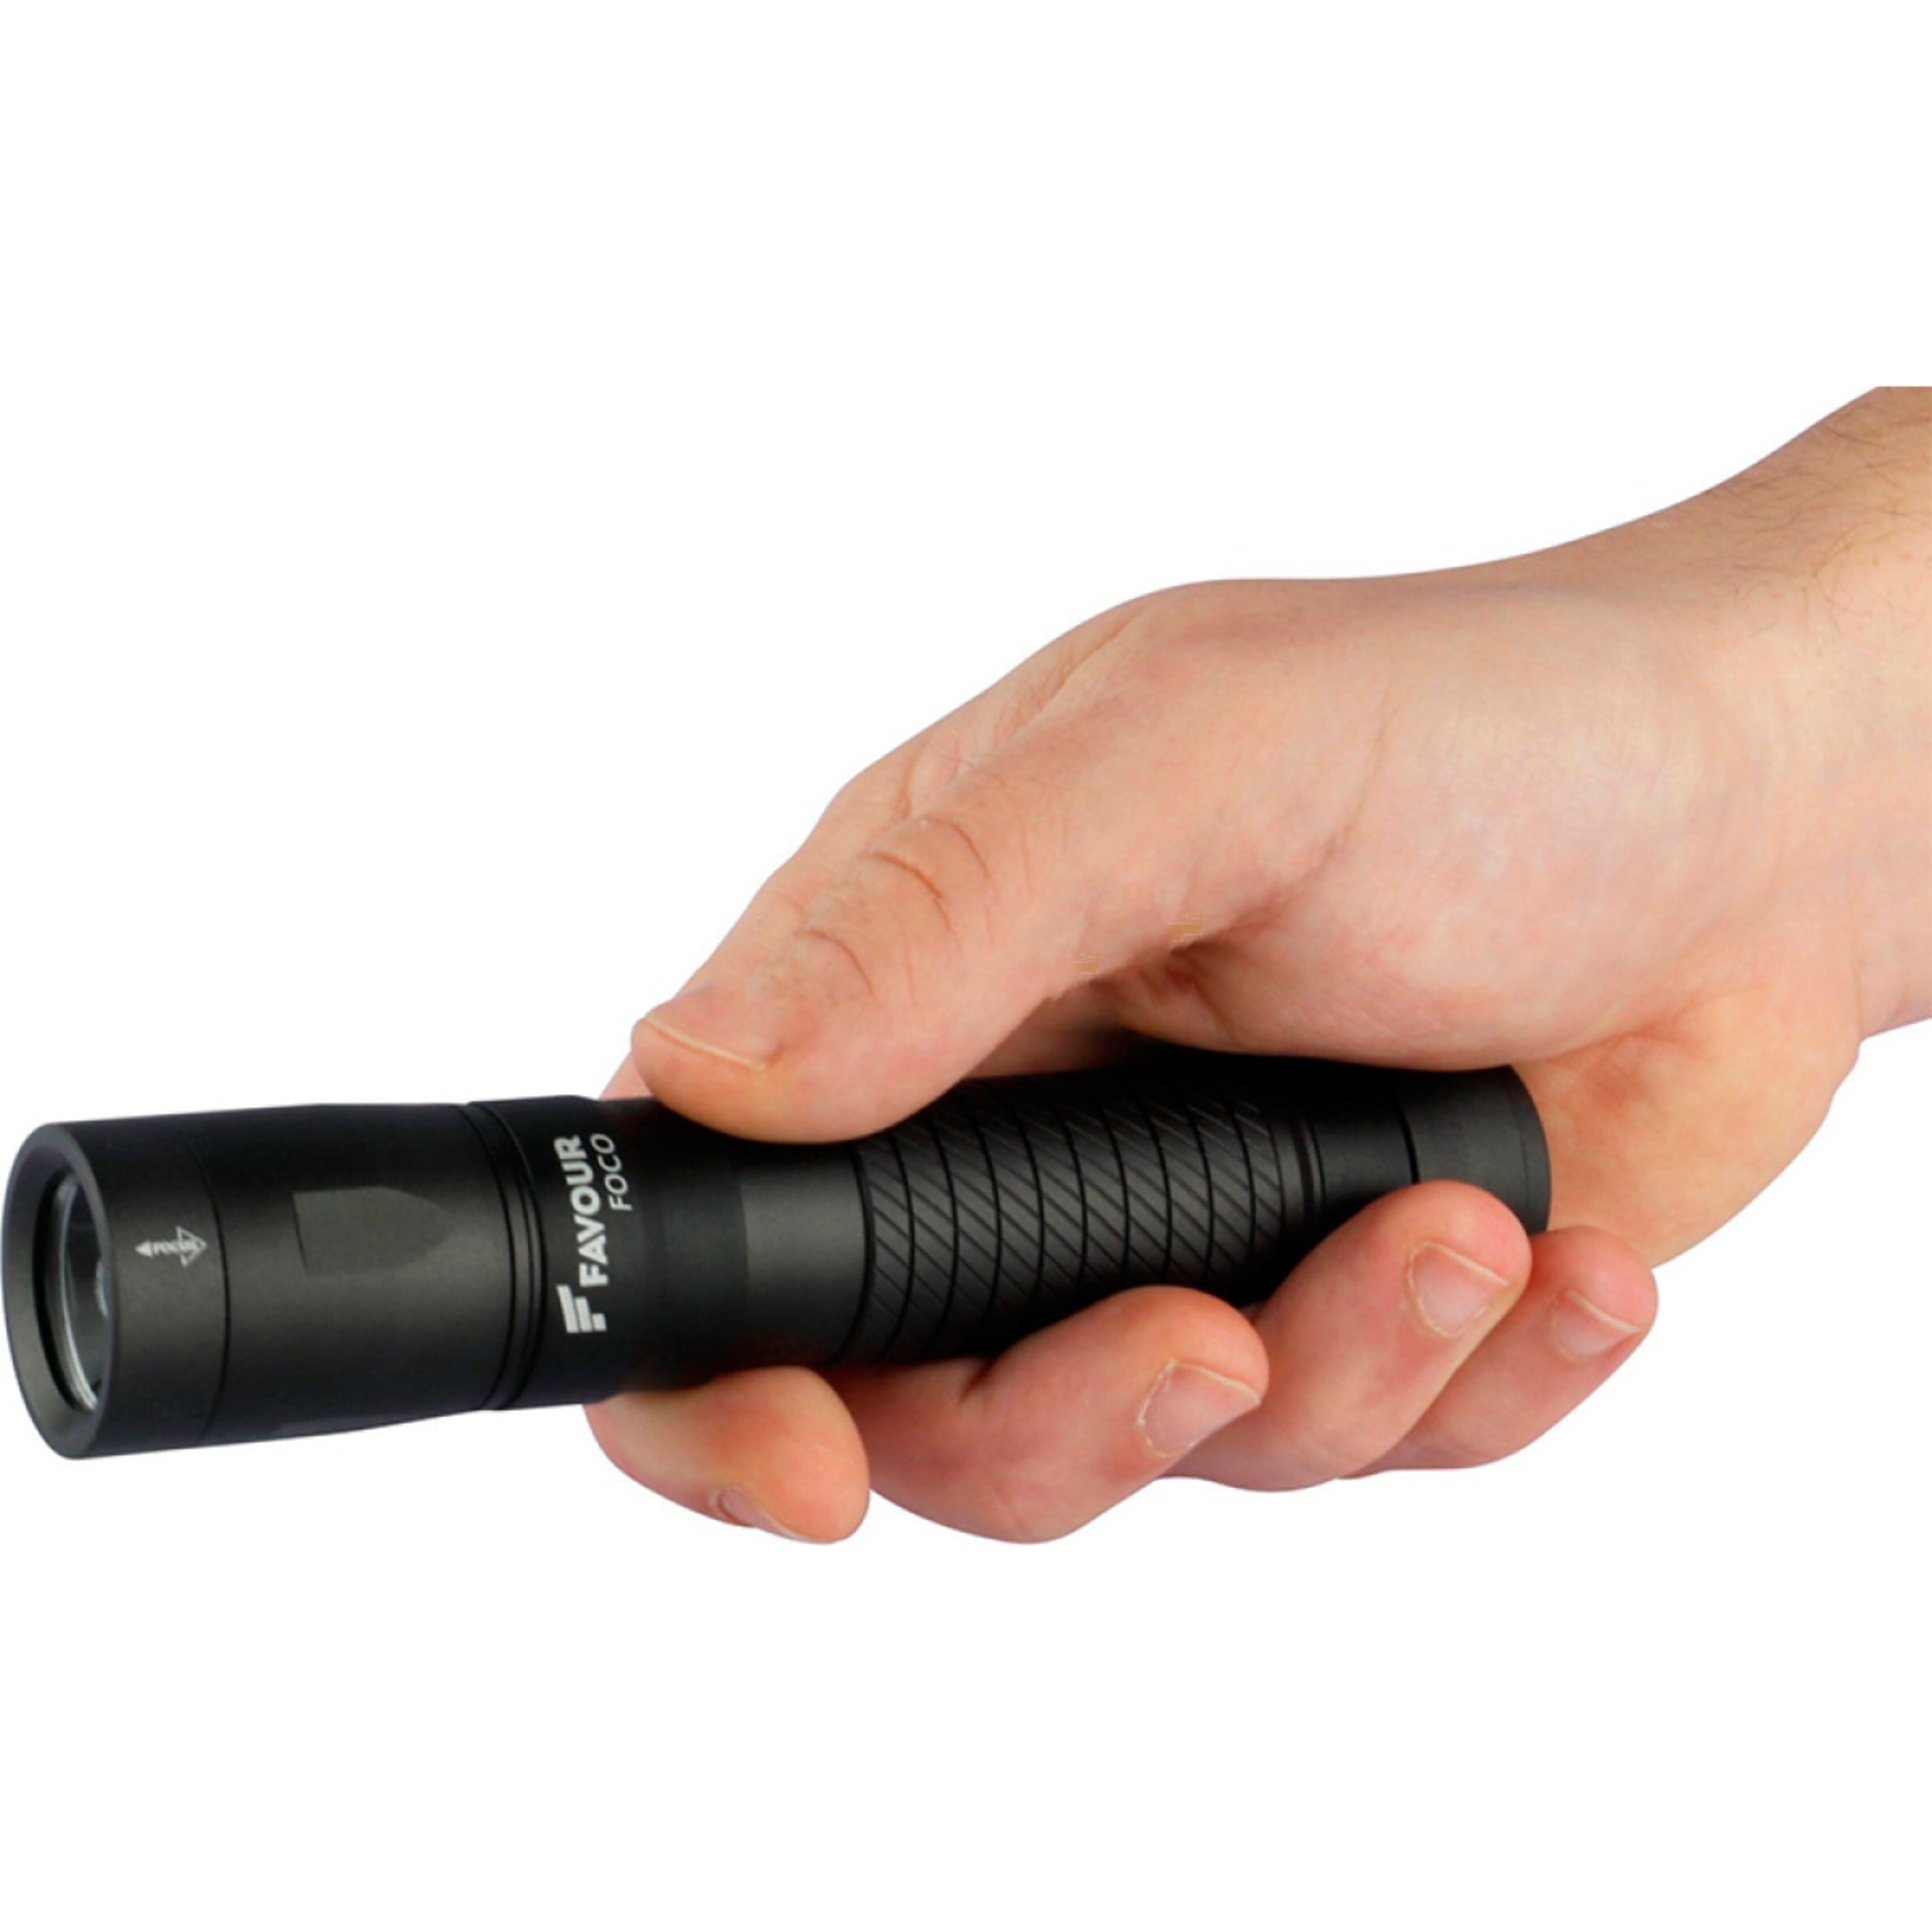 Rechargeable flashlight 1,000 lumens